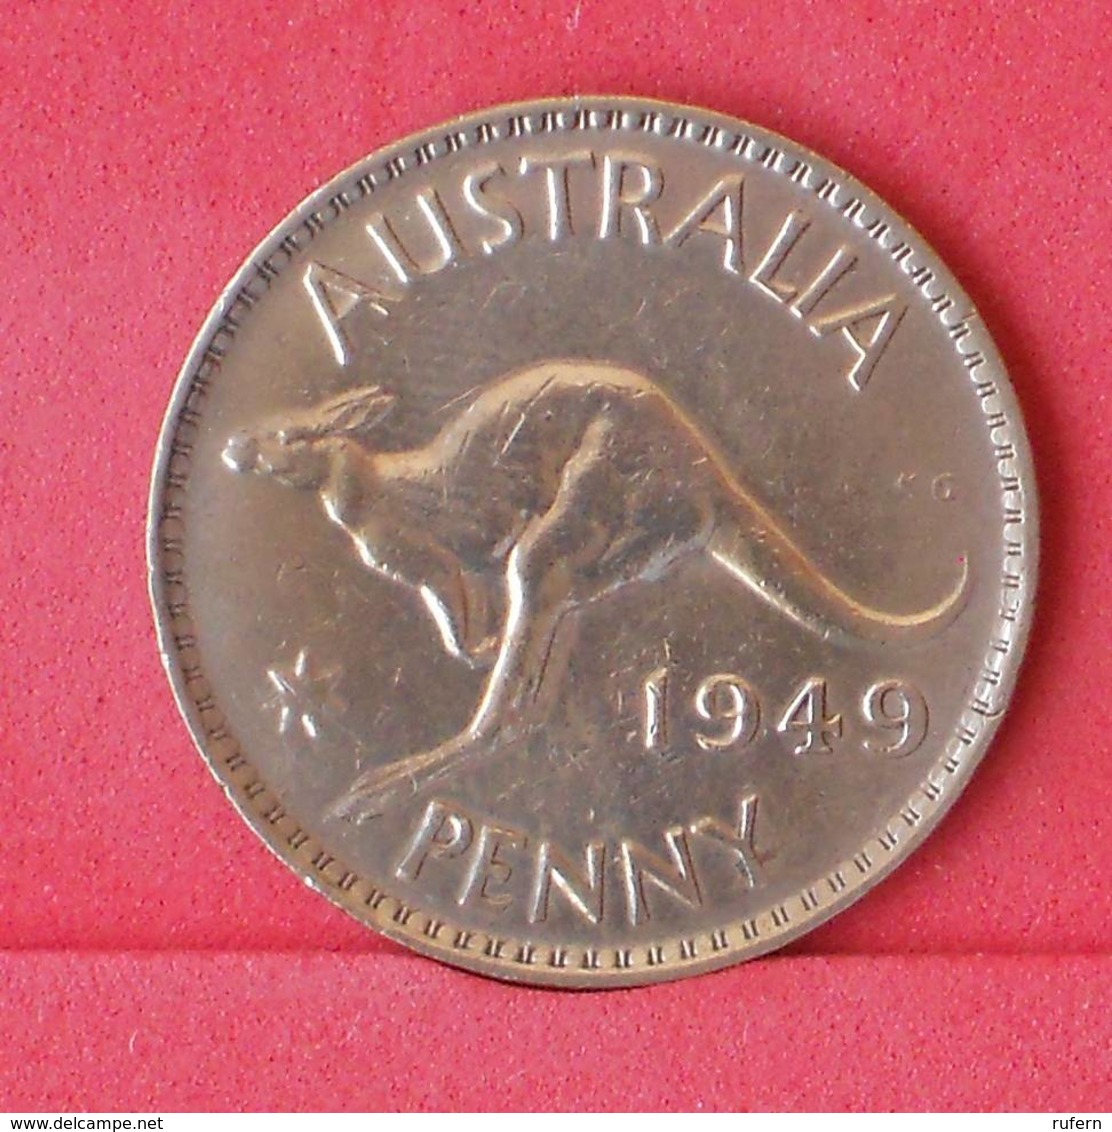 AUSTRALIA 1 PENNY 1949 -    KM# 43 - (Nº30004) - Penny